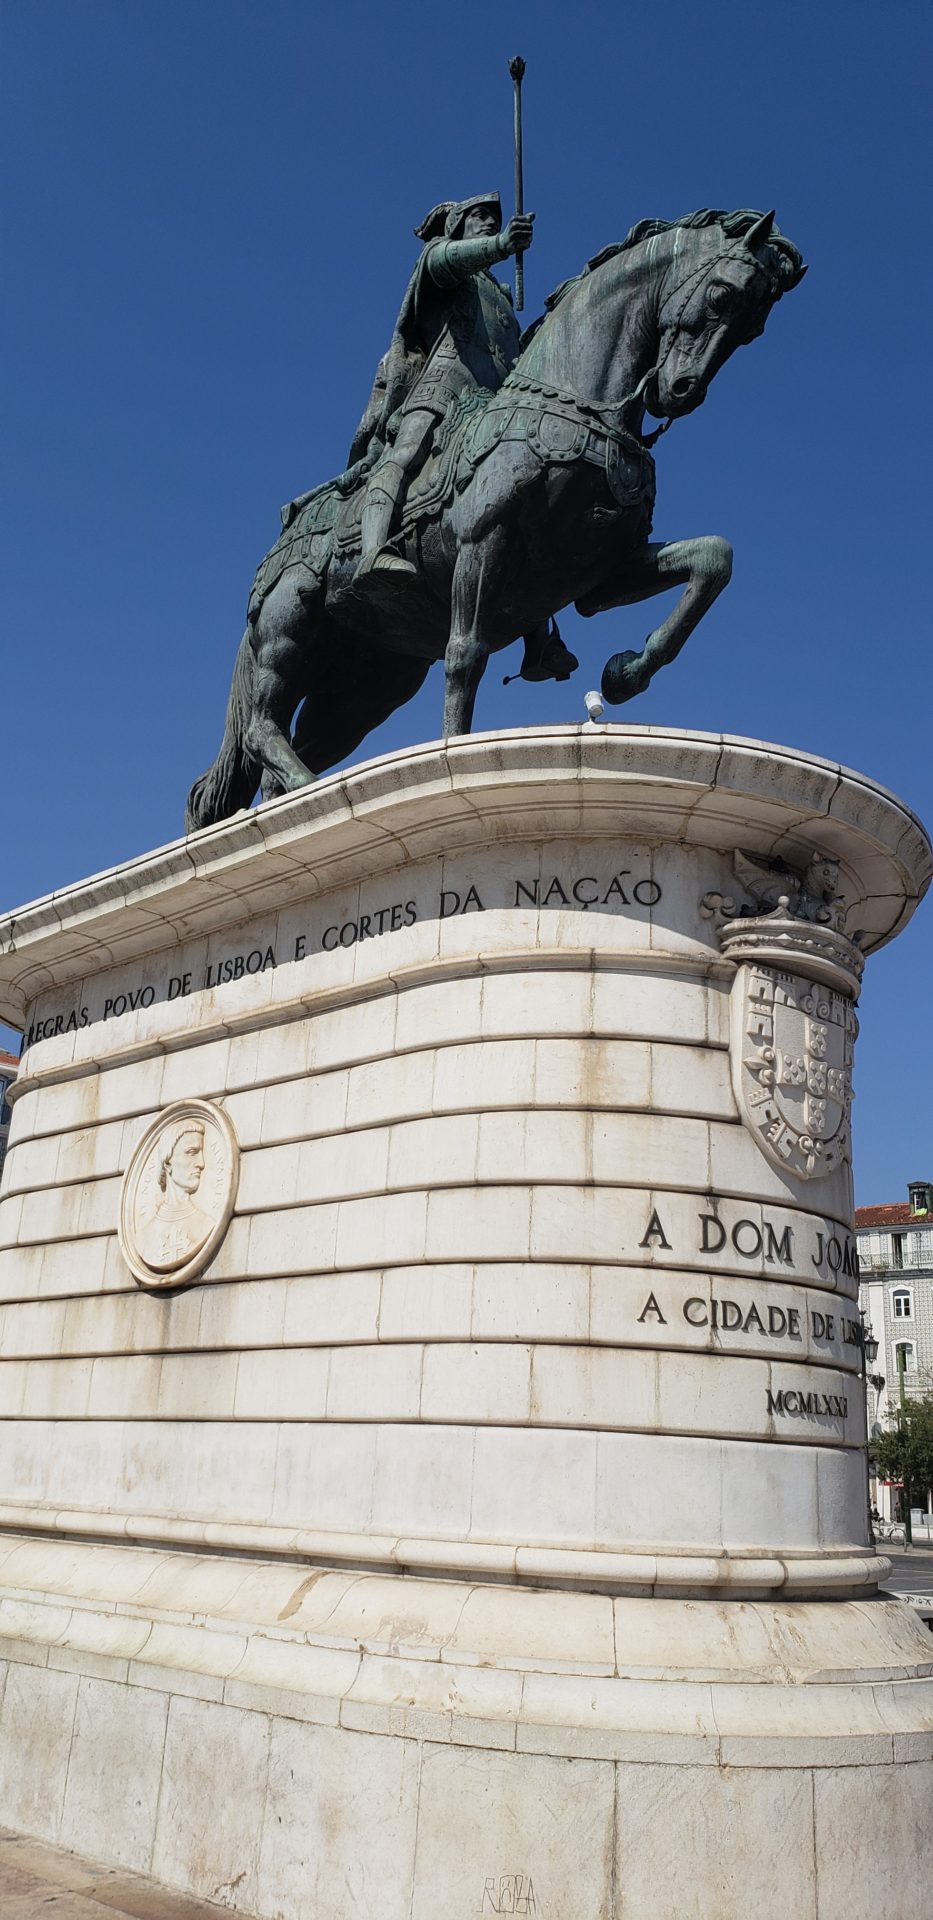 a statue of a horse on a pedestal